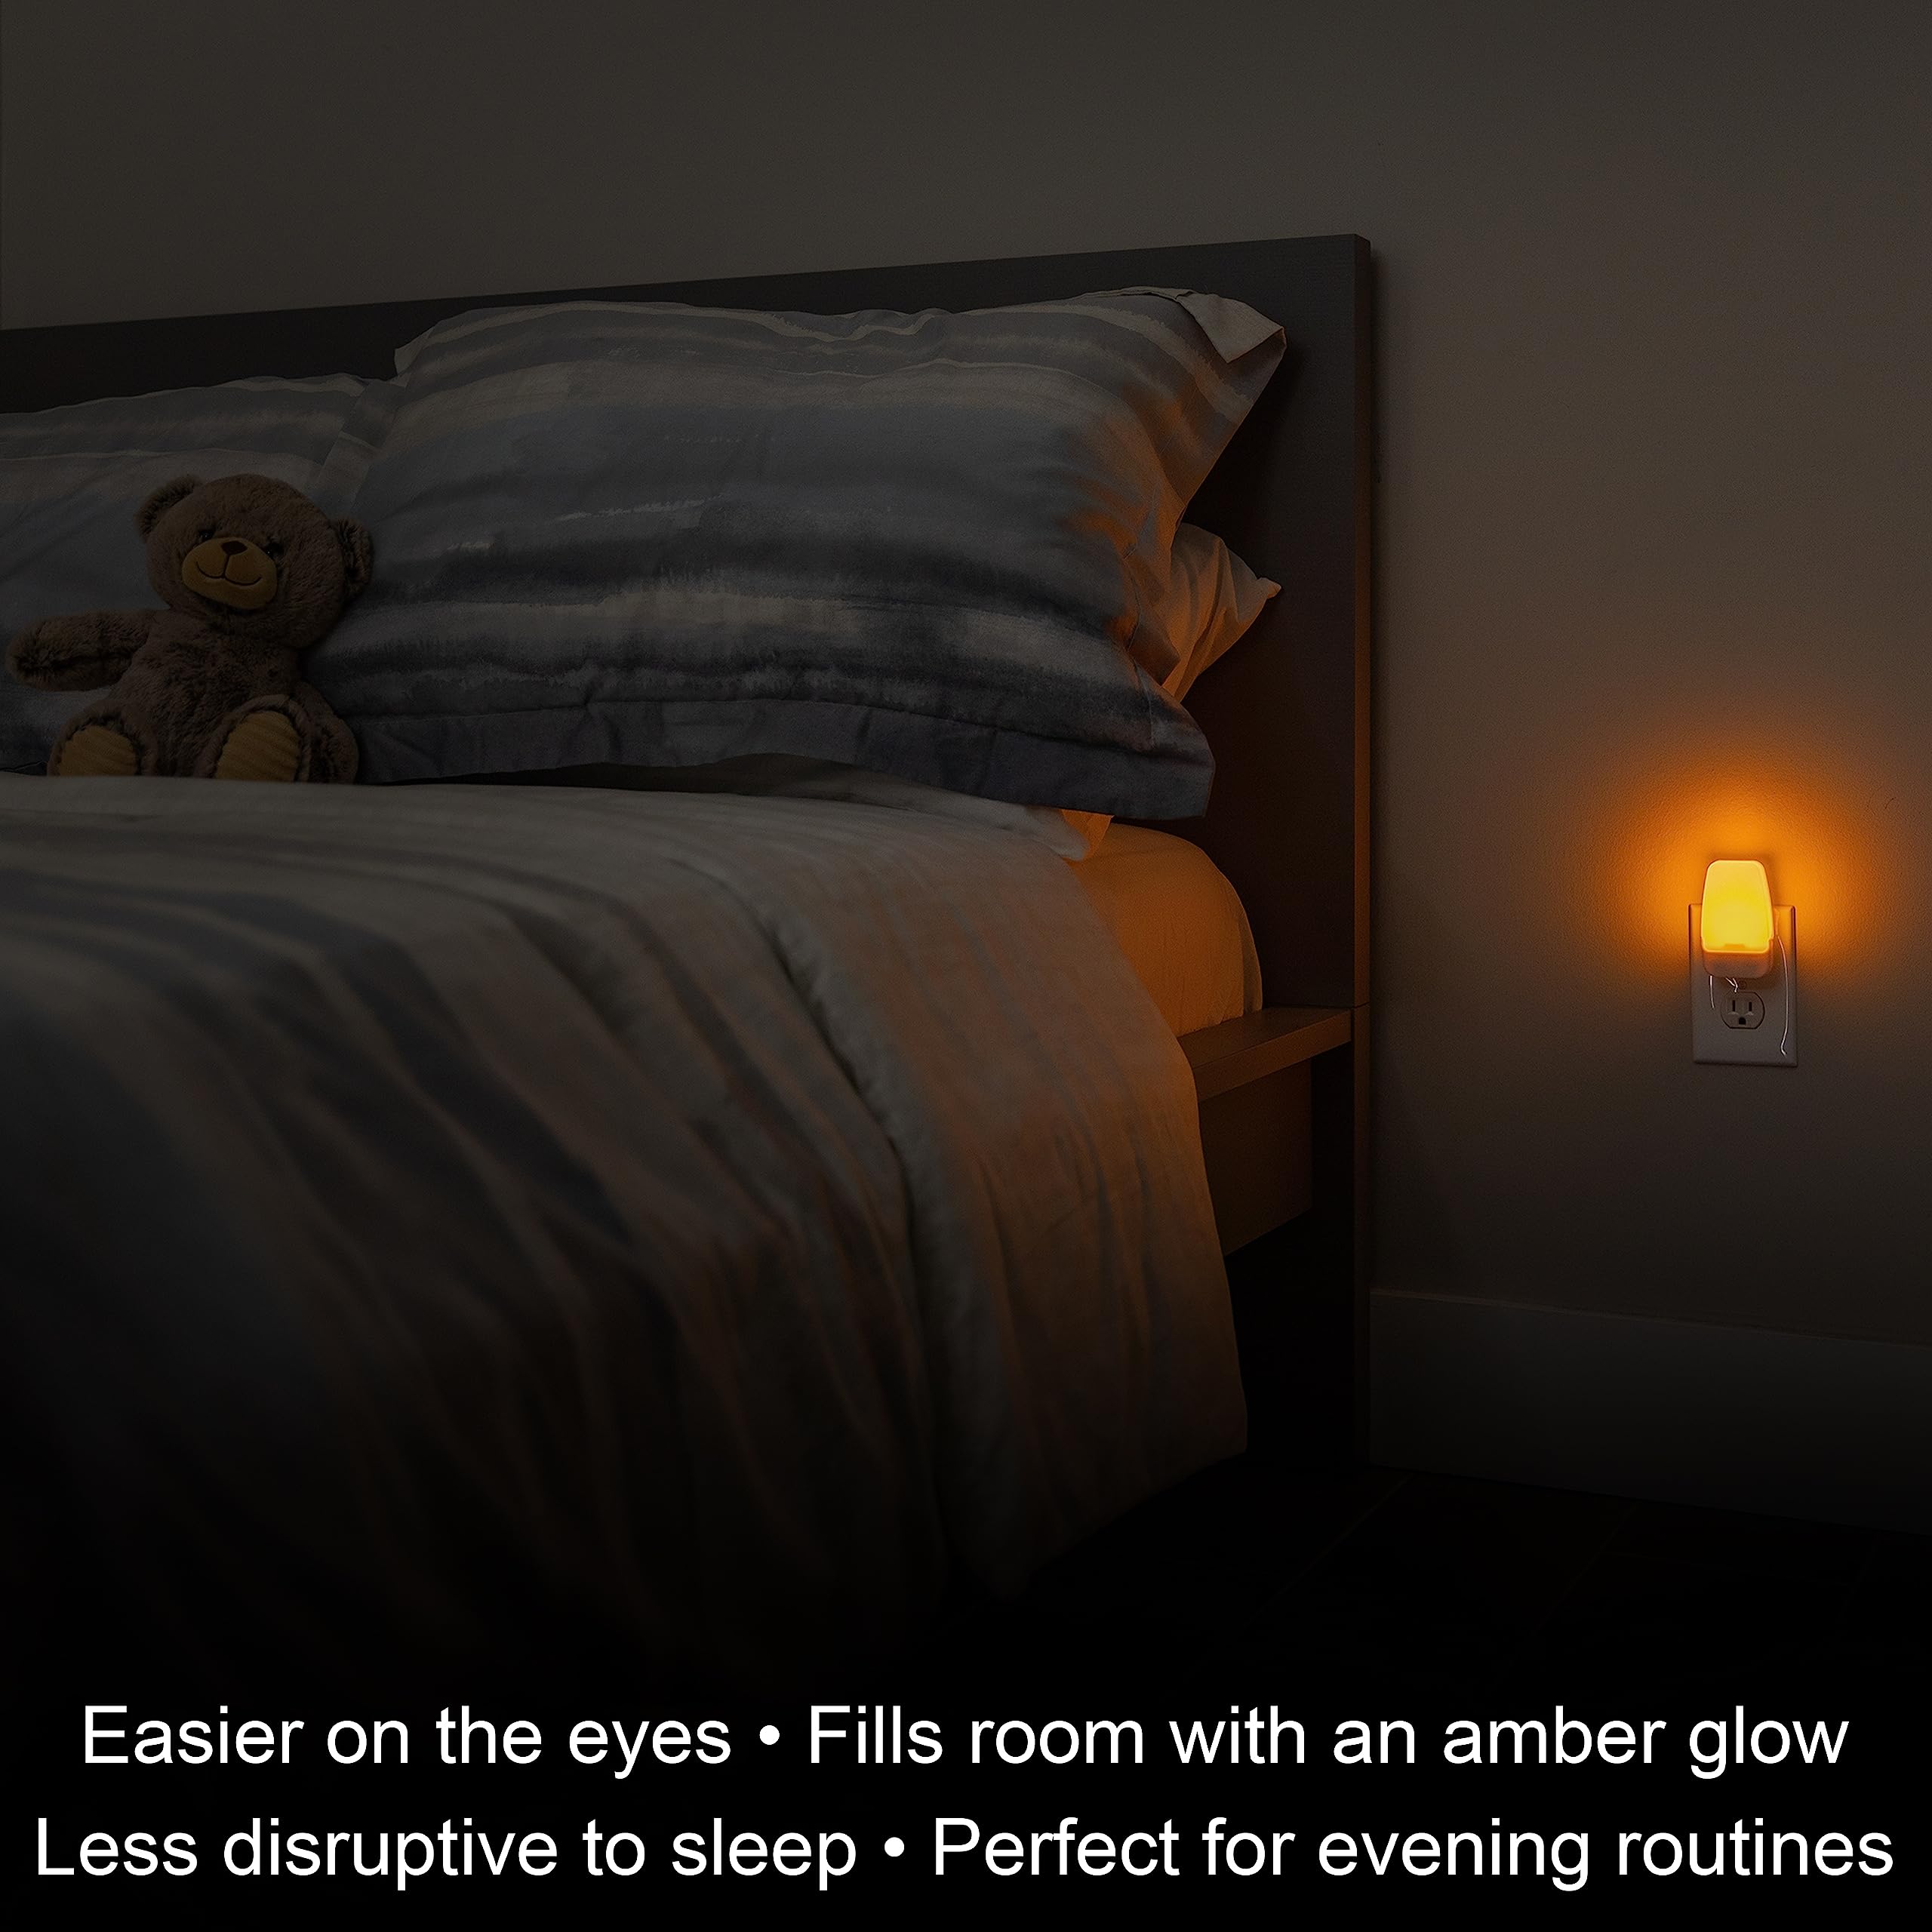 GE LED Night Light, Plug-in, Dusk to Dawn Sensor, Amber, UL-Certified, Energy Efficient, Ideal Nightlight for Bedroom, Bathroom, Nursery, Hallway, Kitchen, 76135, 2 Pack